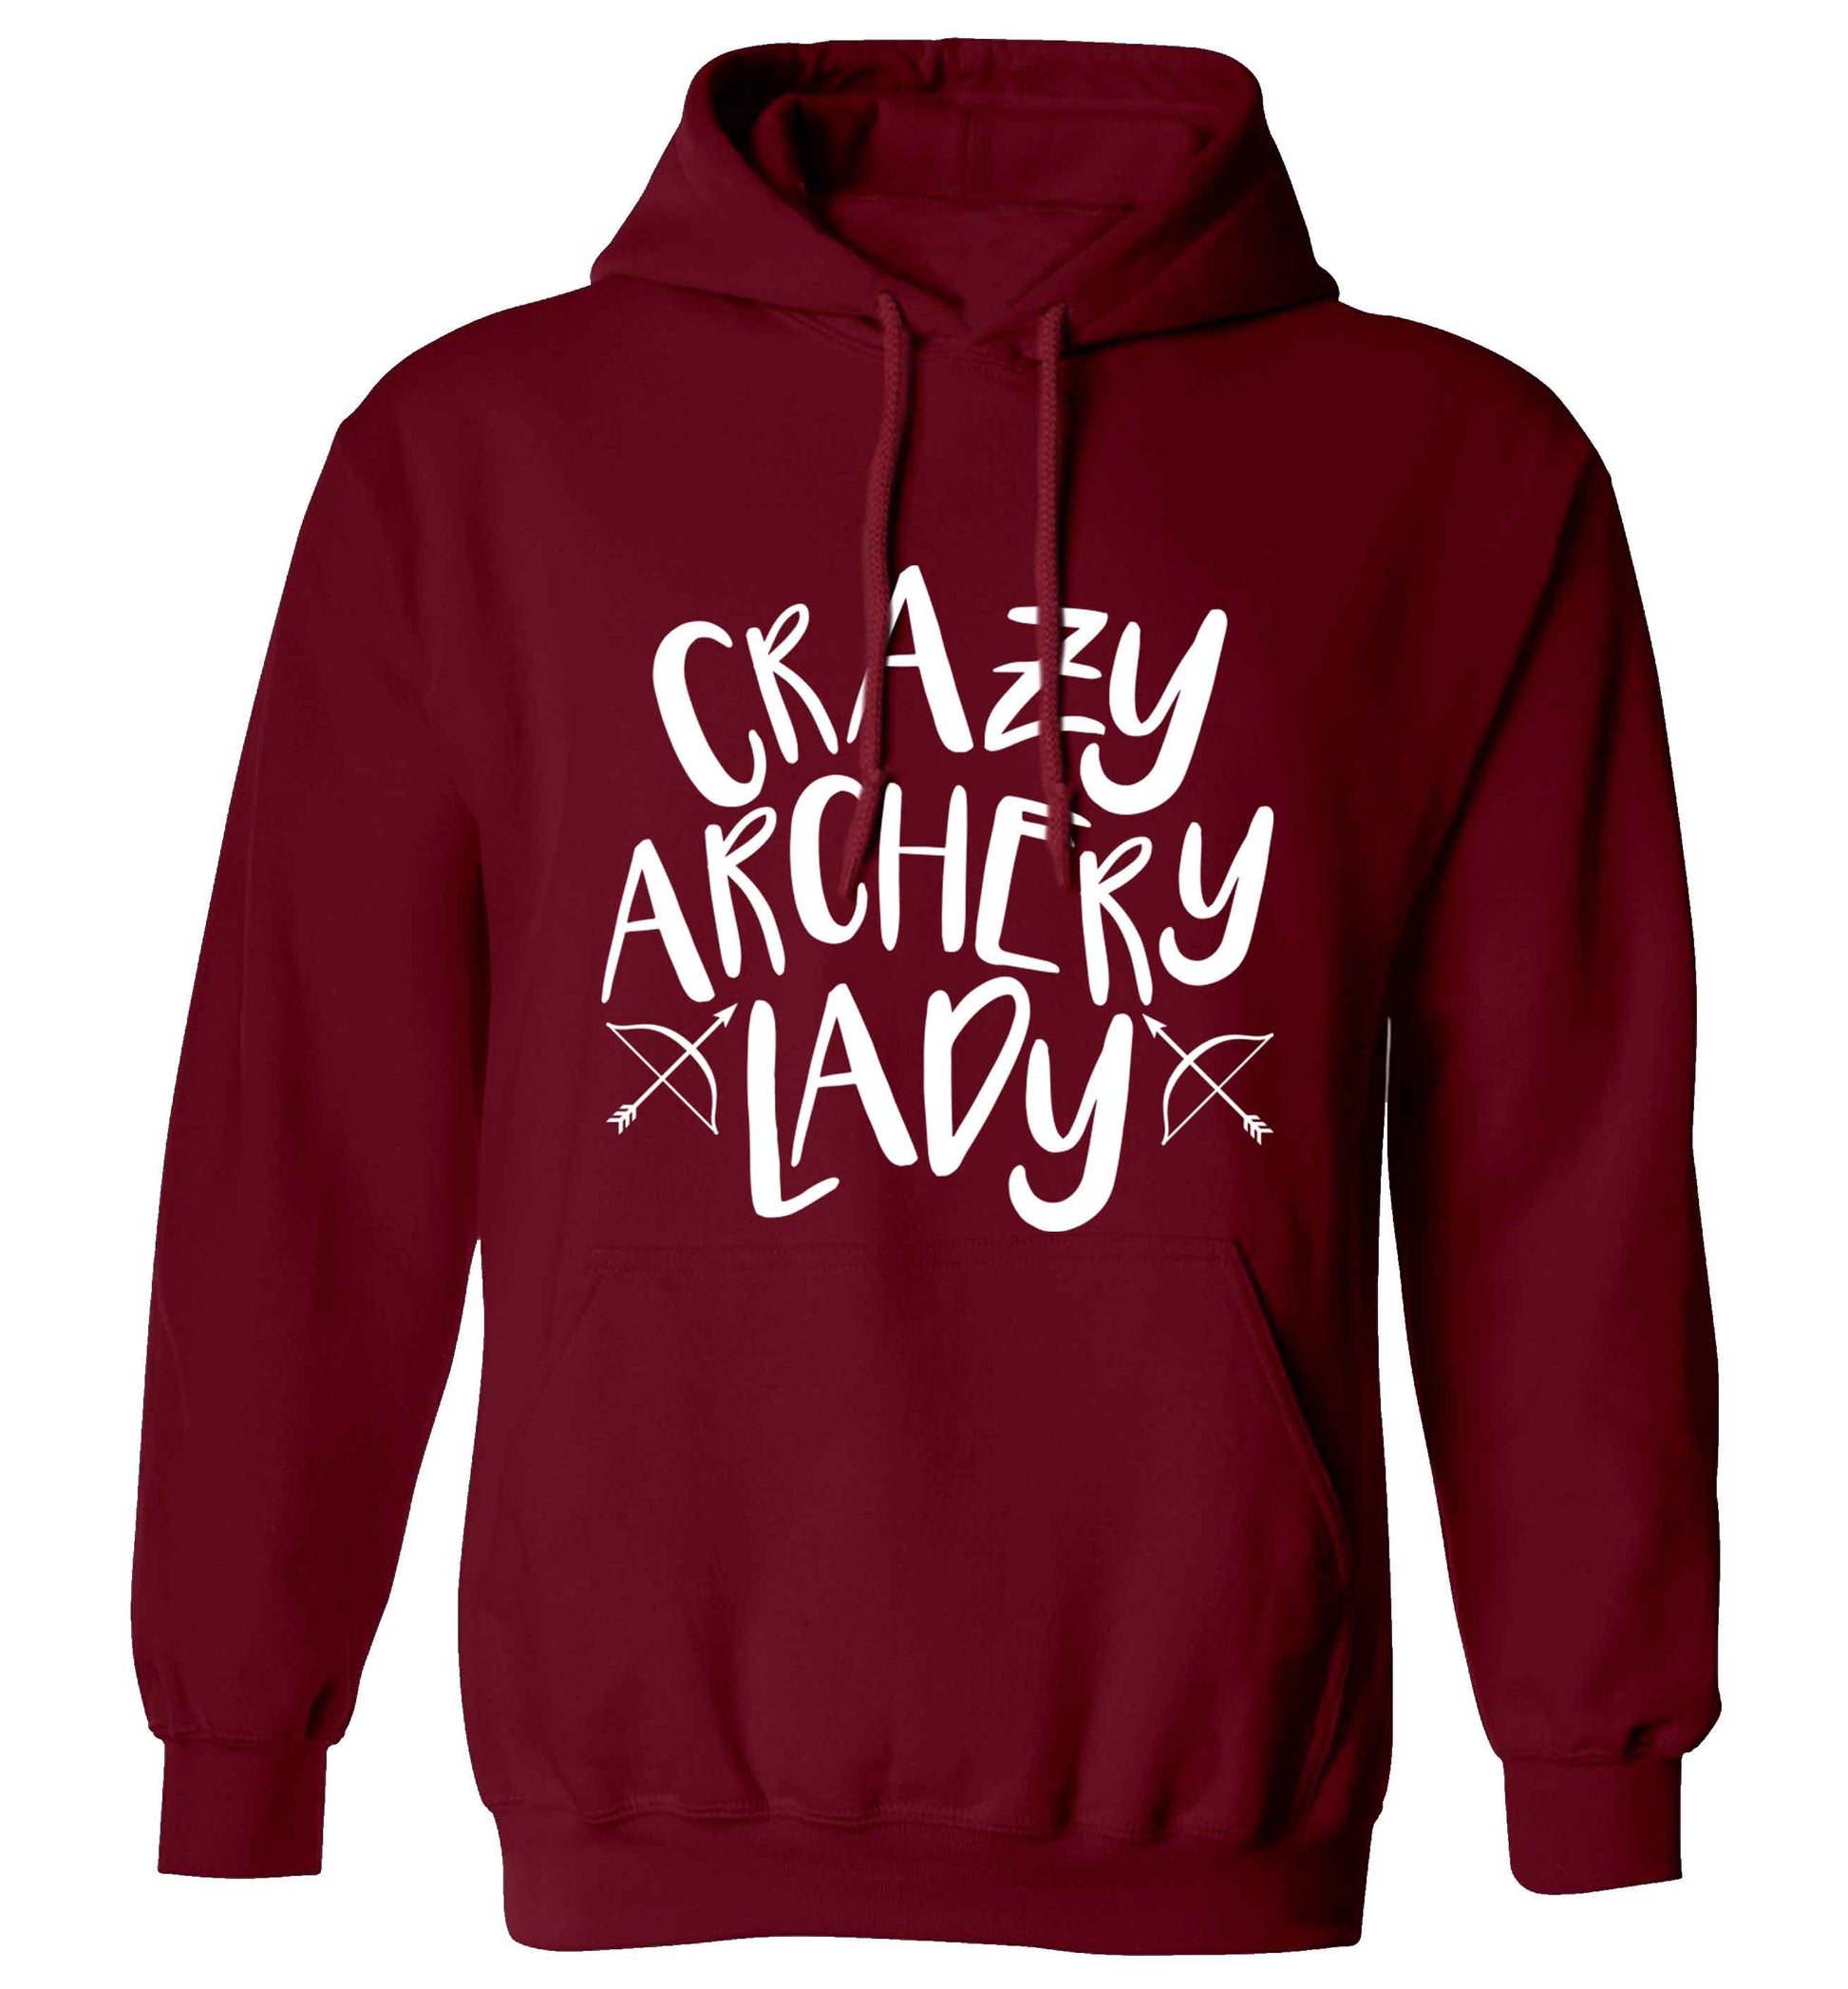 Crazy archery lady adults unisex maroon hoodie 2XL